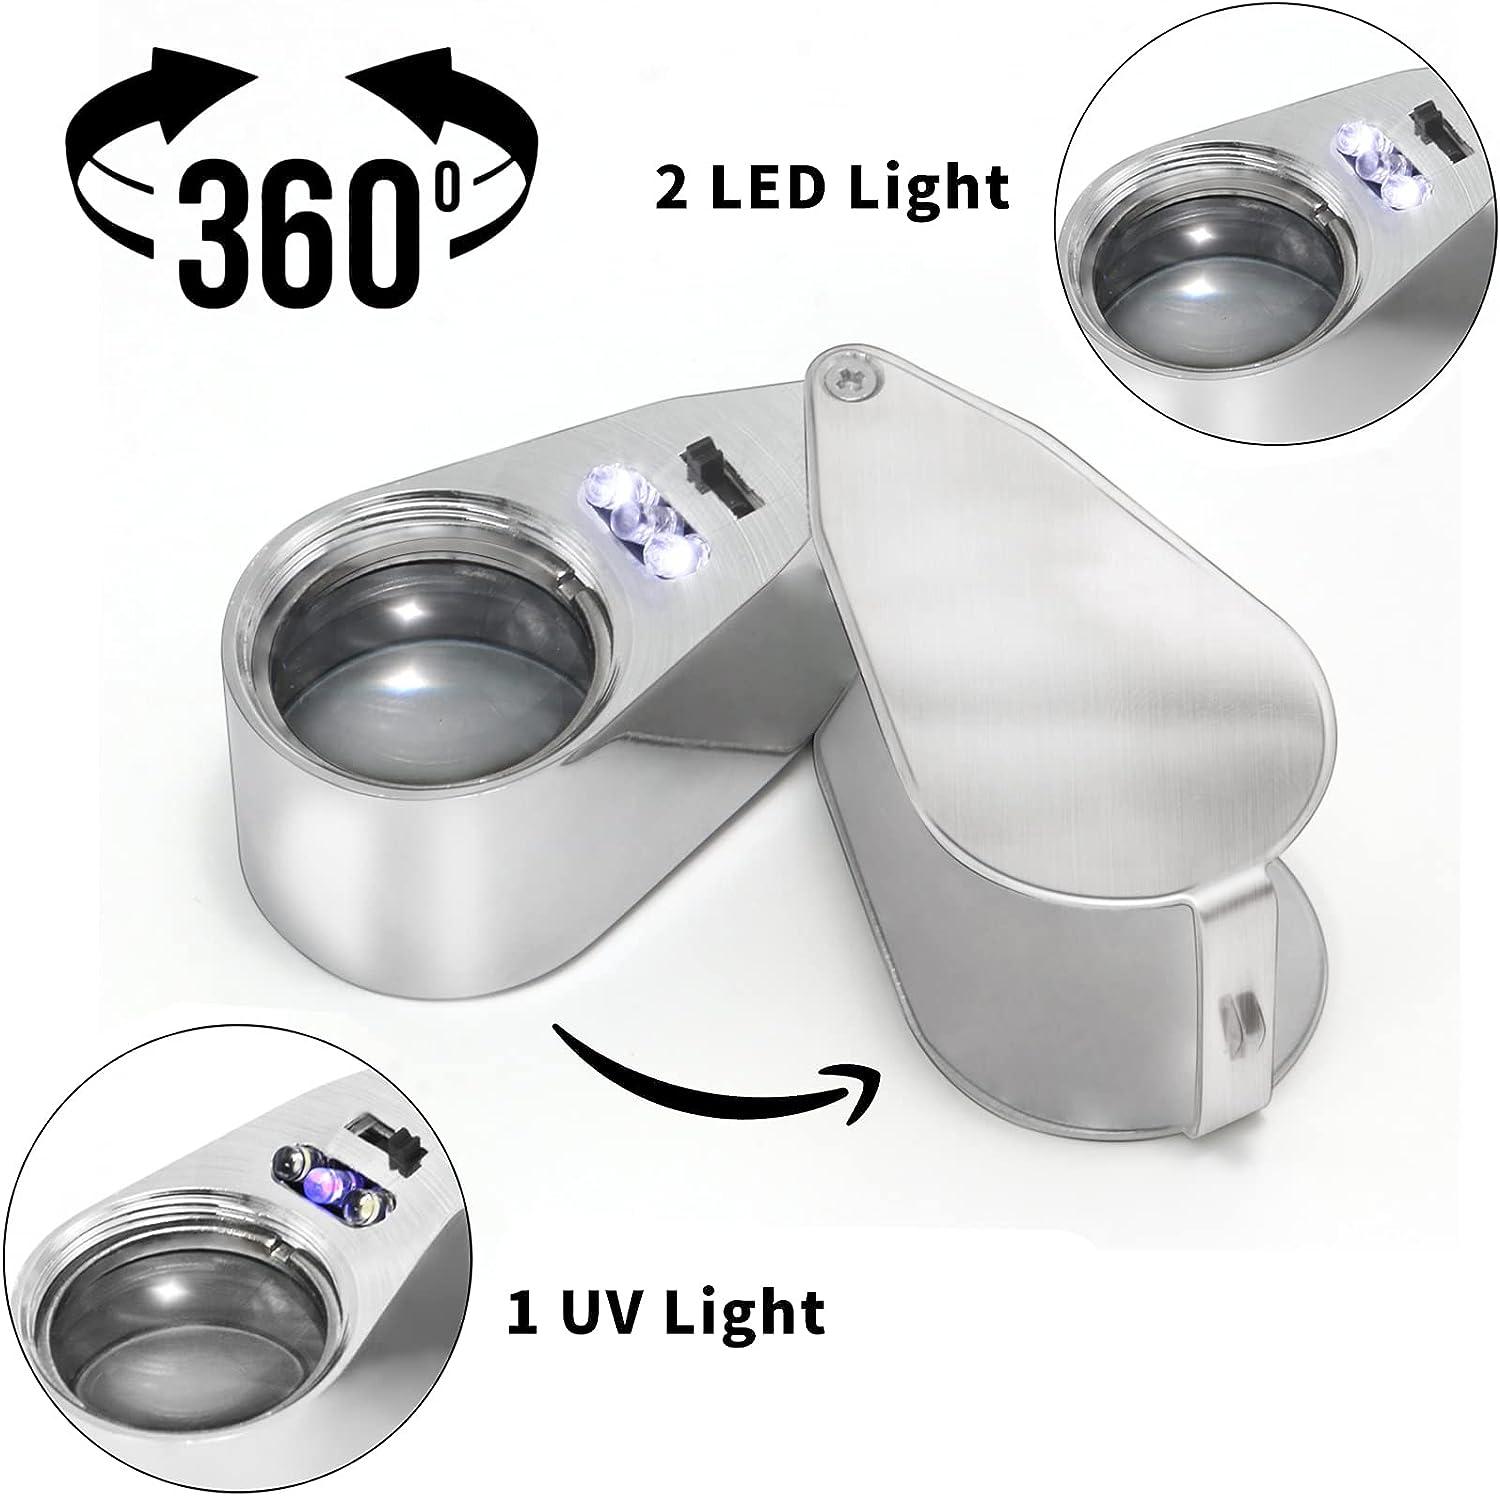 40X Full Metal Illuminated Jewelers Eye Loupe Magnifier, Small